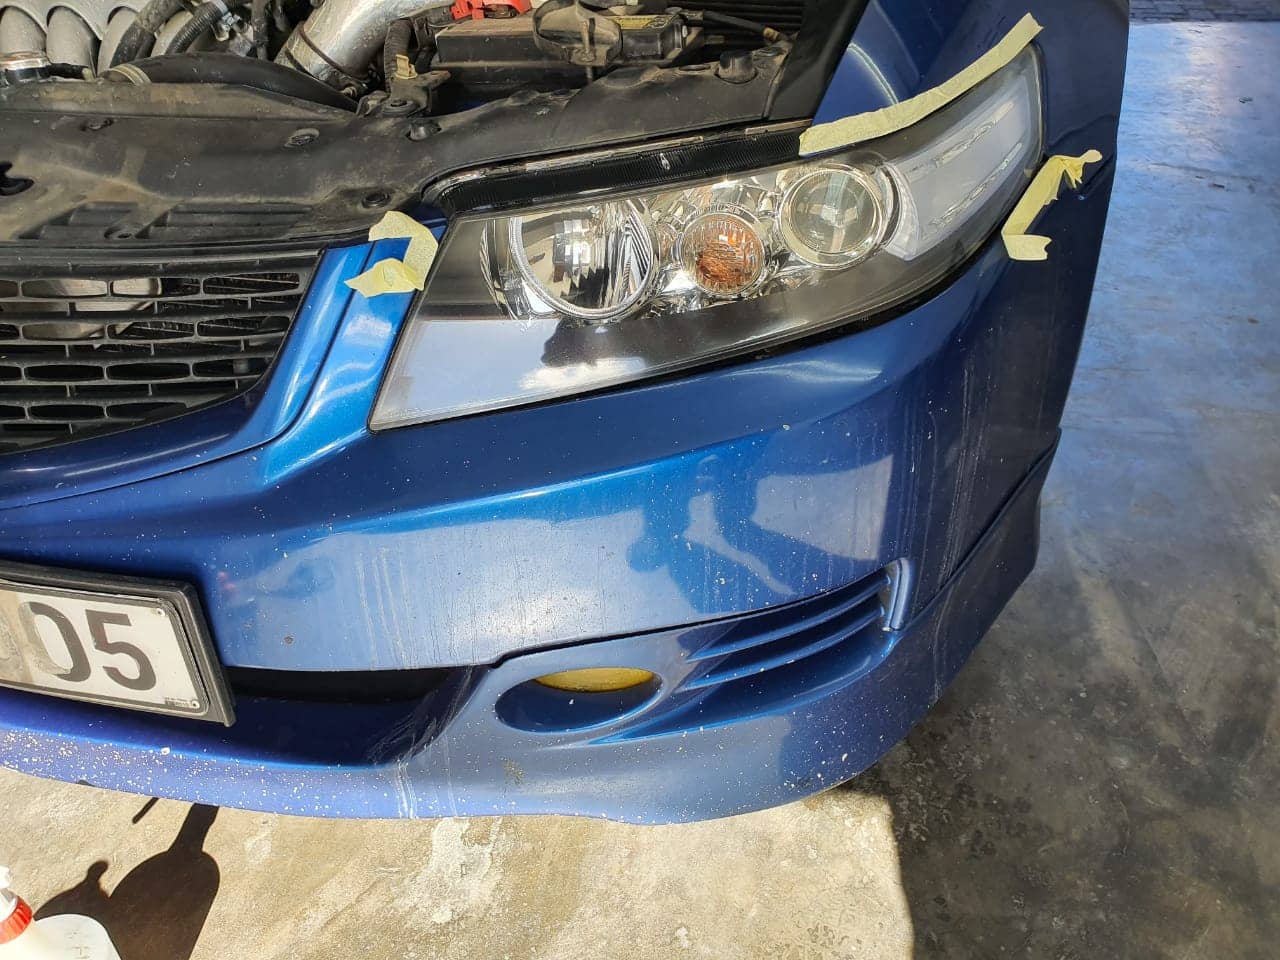 Photo of Honda Accord S Headlight Restoration After